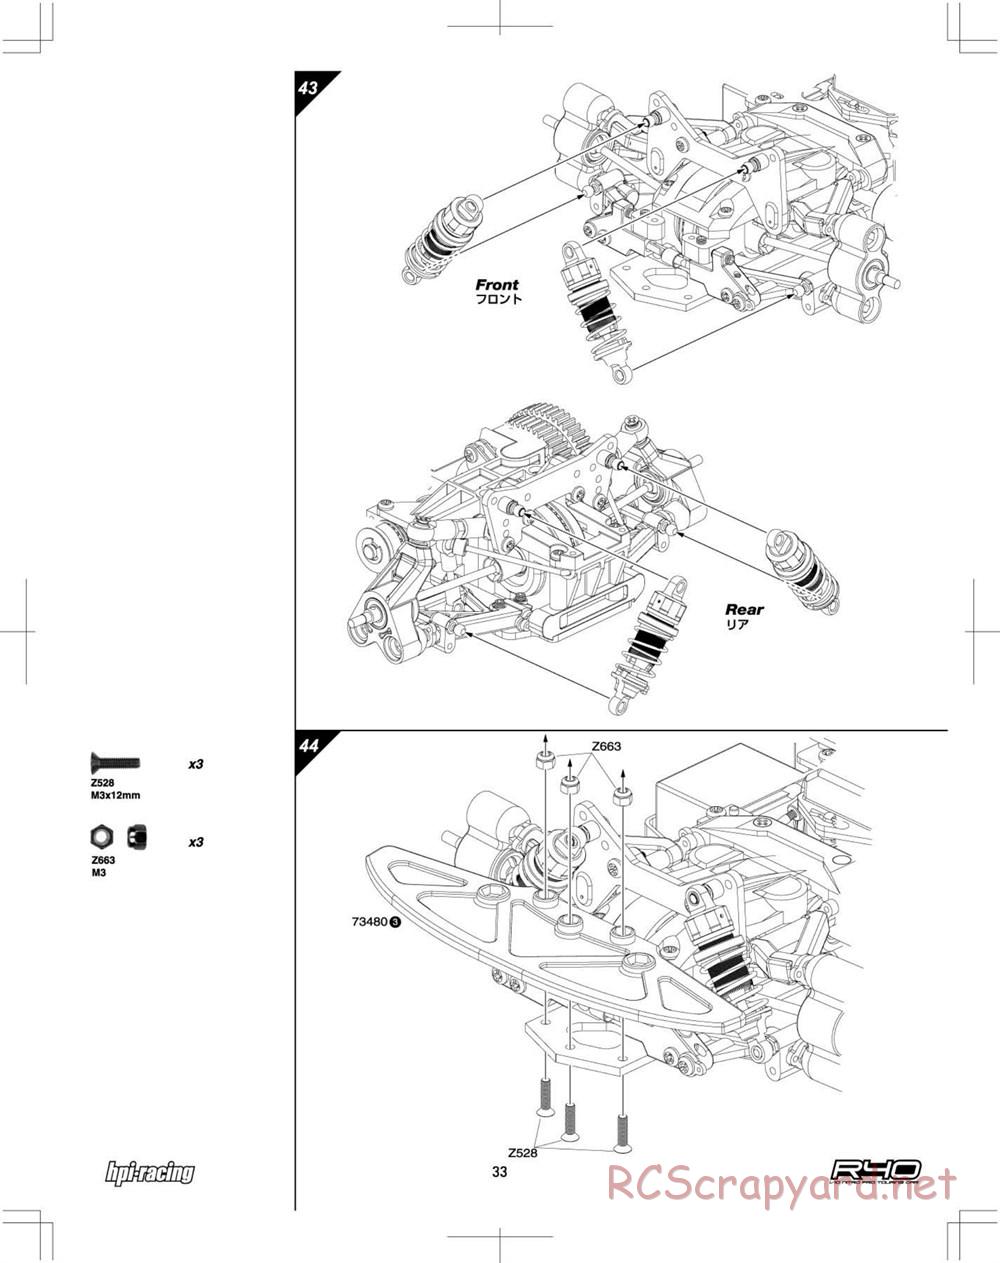 HPI - R40 Nitro Touring Car - Manual - Page 33